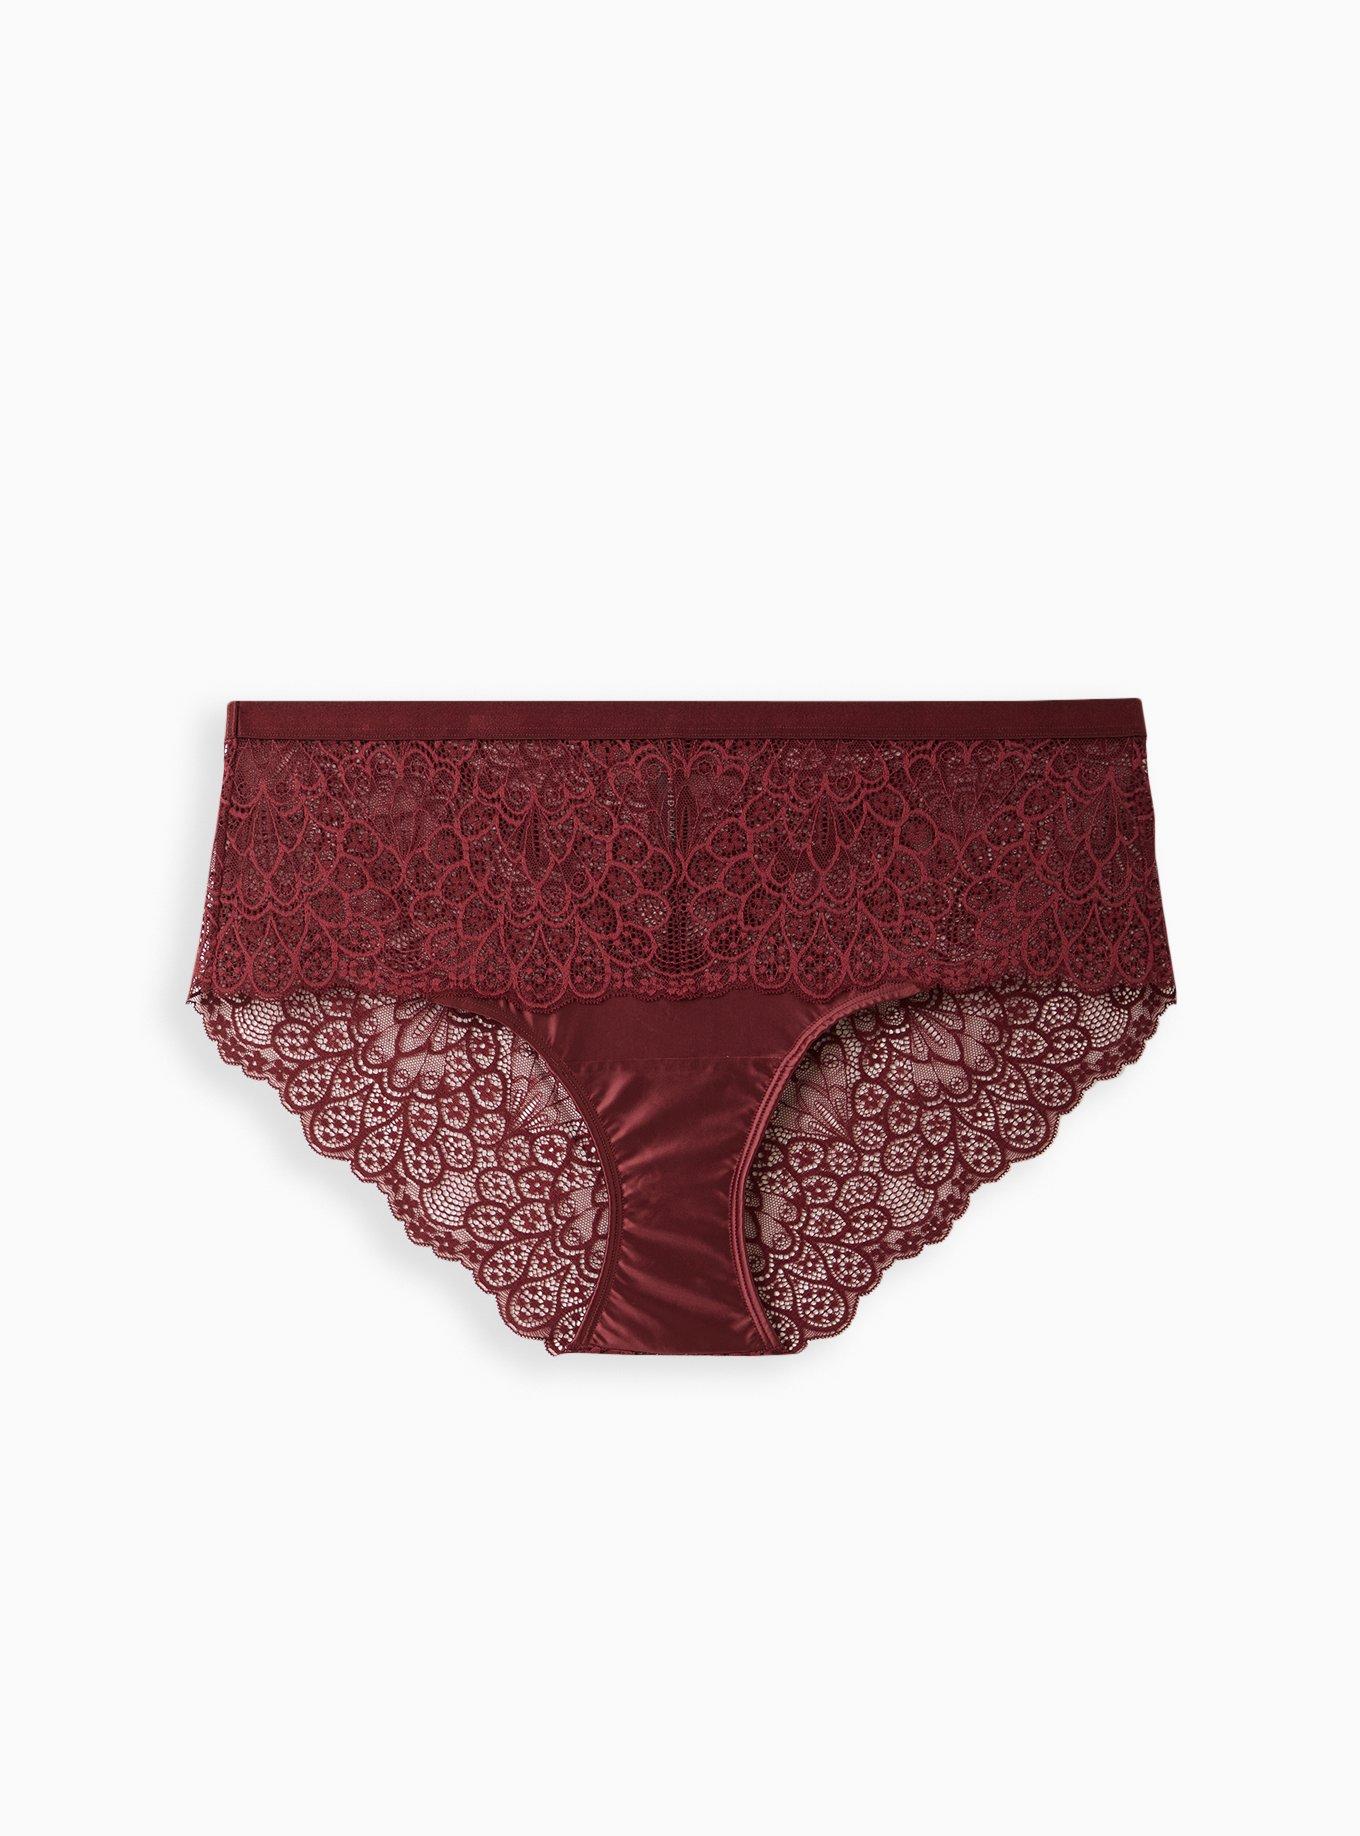 torrid, Intimates & Sleepwear, Nwt Torrid Hipster Pantie Underwear Sz 2x  Pink Red Jersey Lace